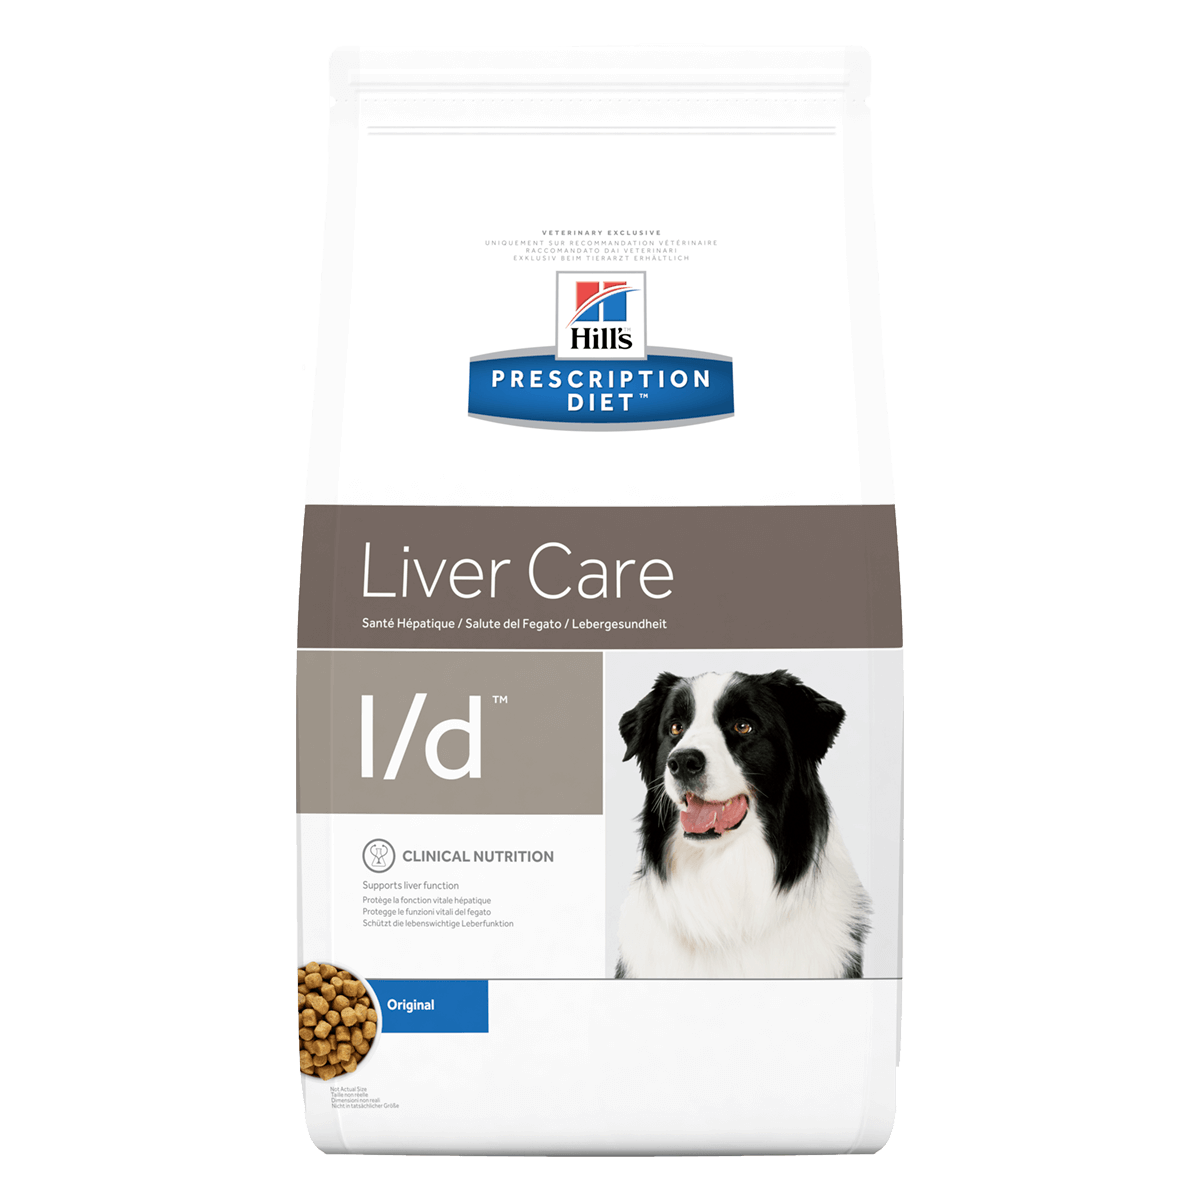 Hill's PD l/d Liver Care, 12 кг - диетический корм Хилс для собак